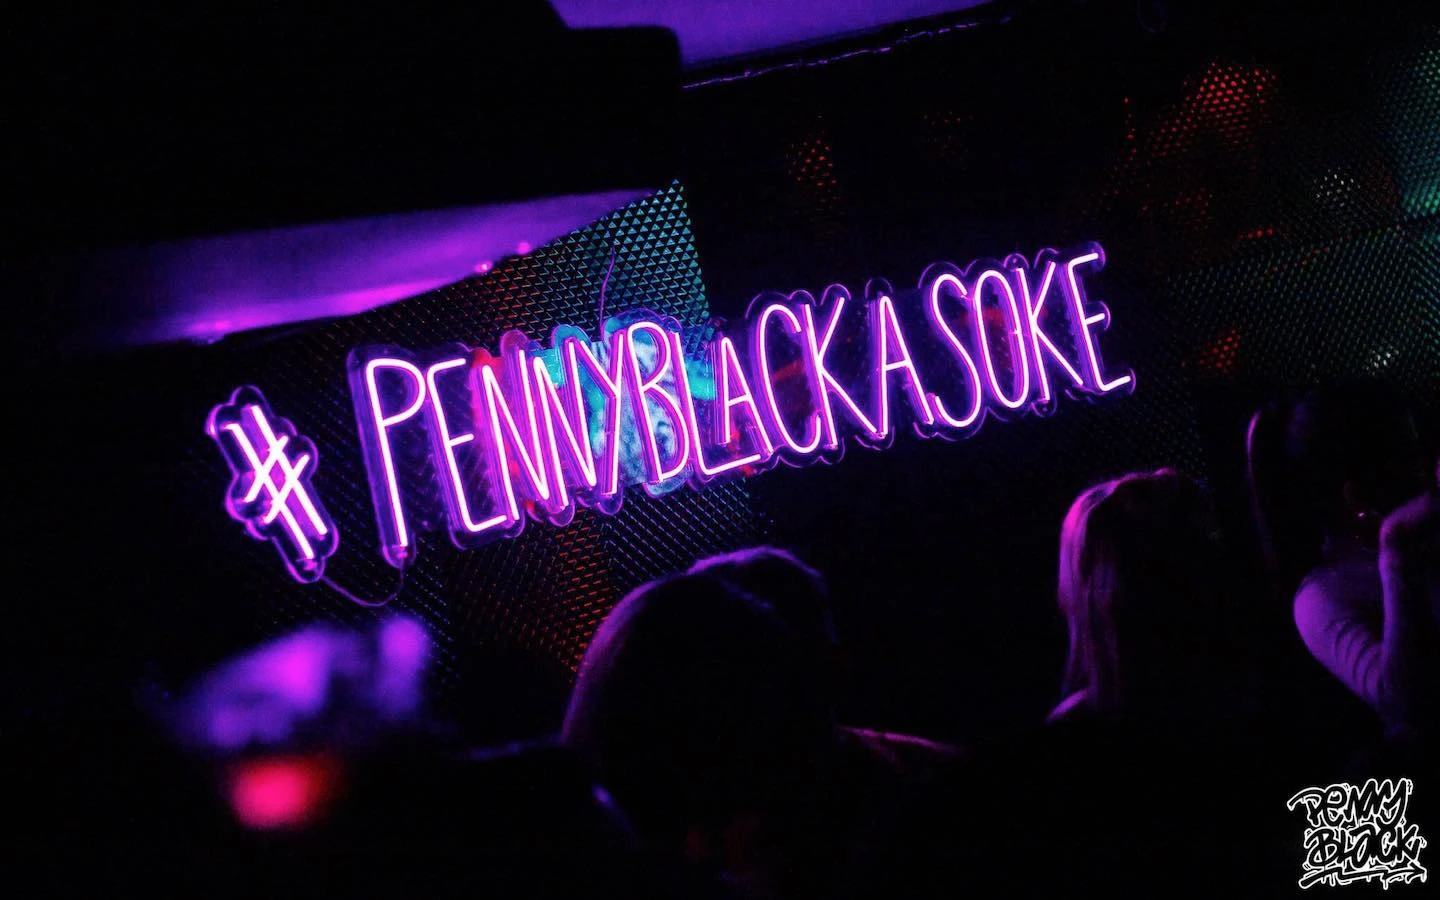 neon sign of penny black asoke nightclub in soi cowboy bangkok